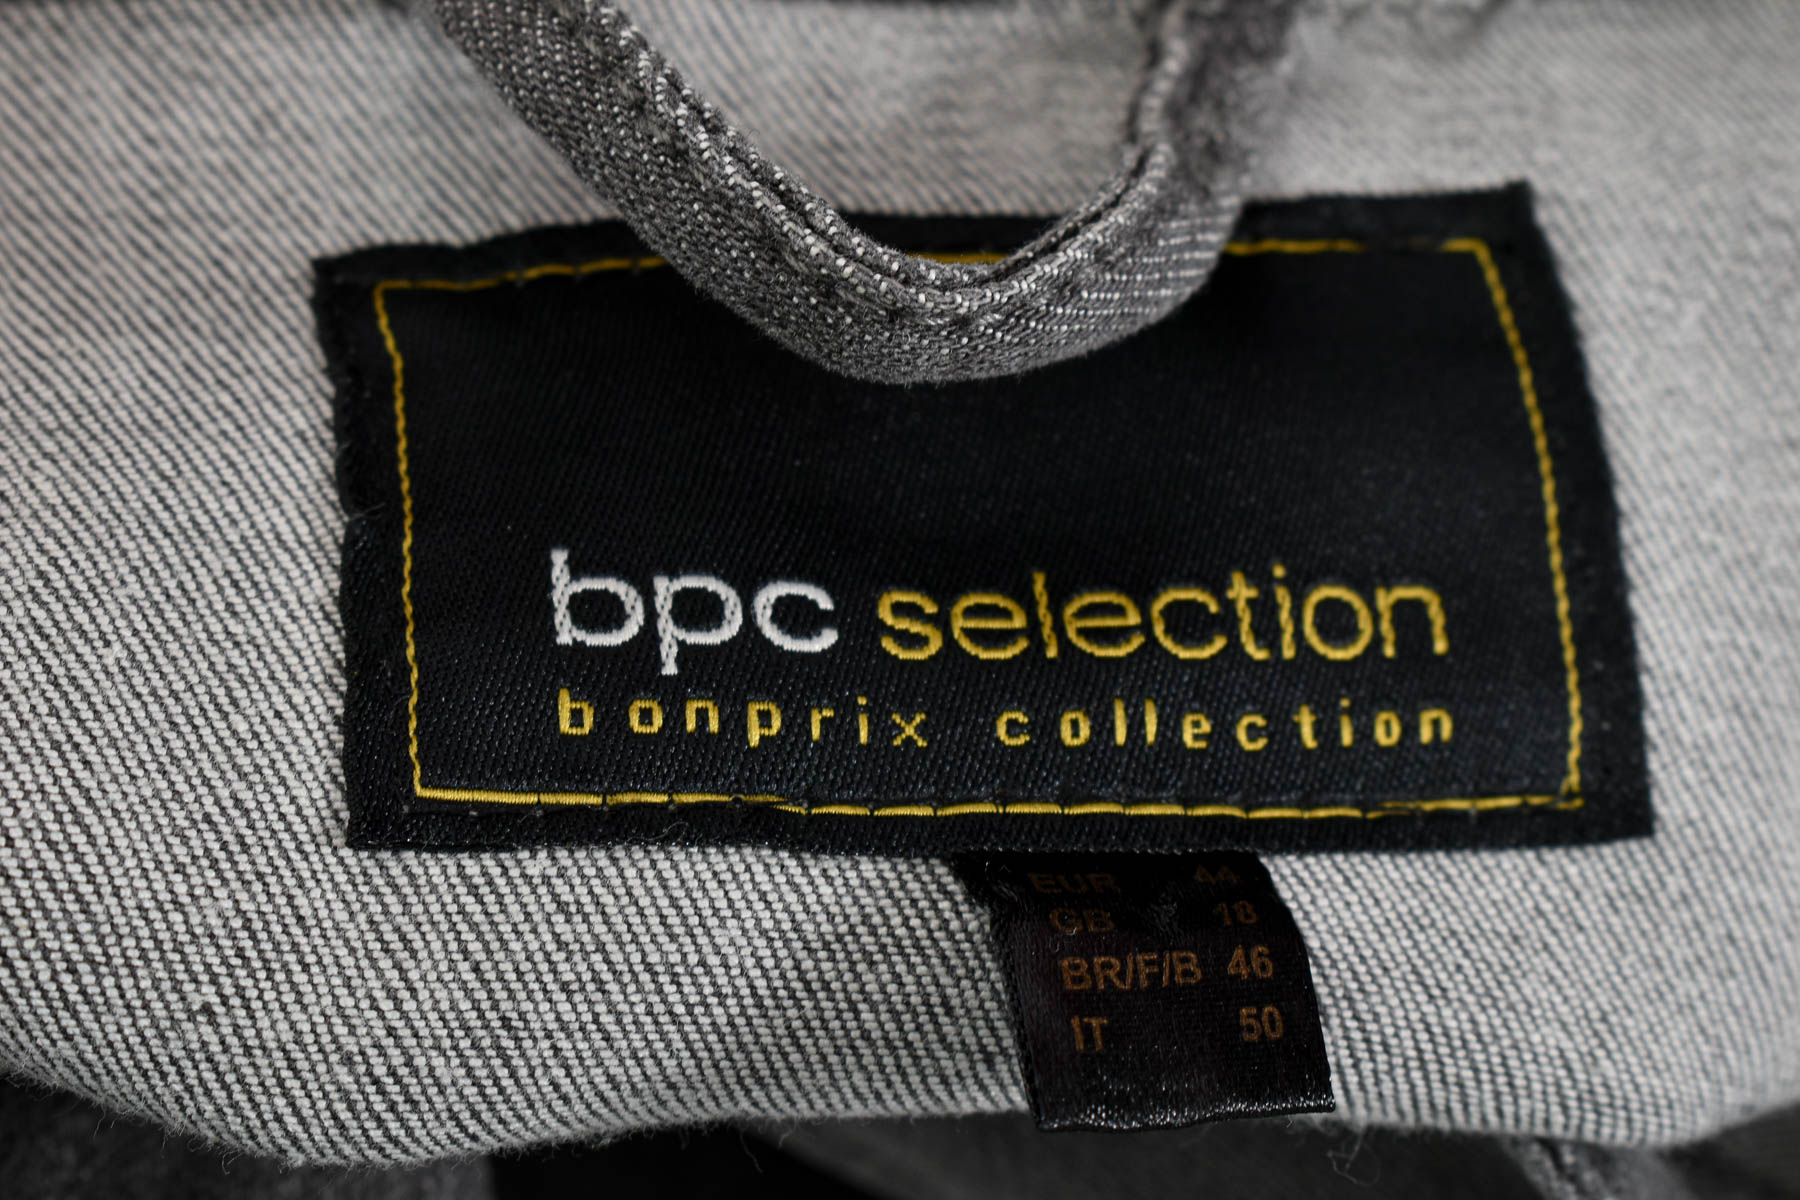 bpc bonprix collection Jackets at reasonable prices